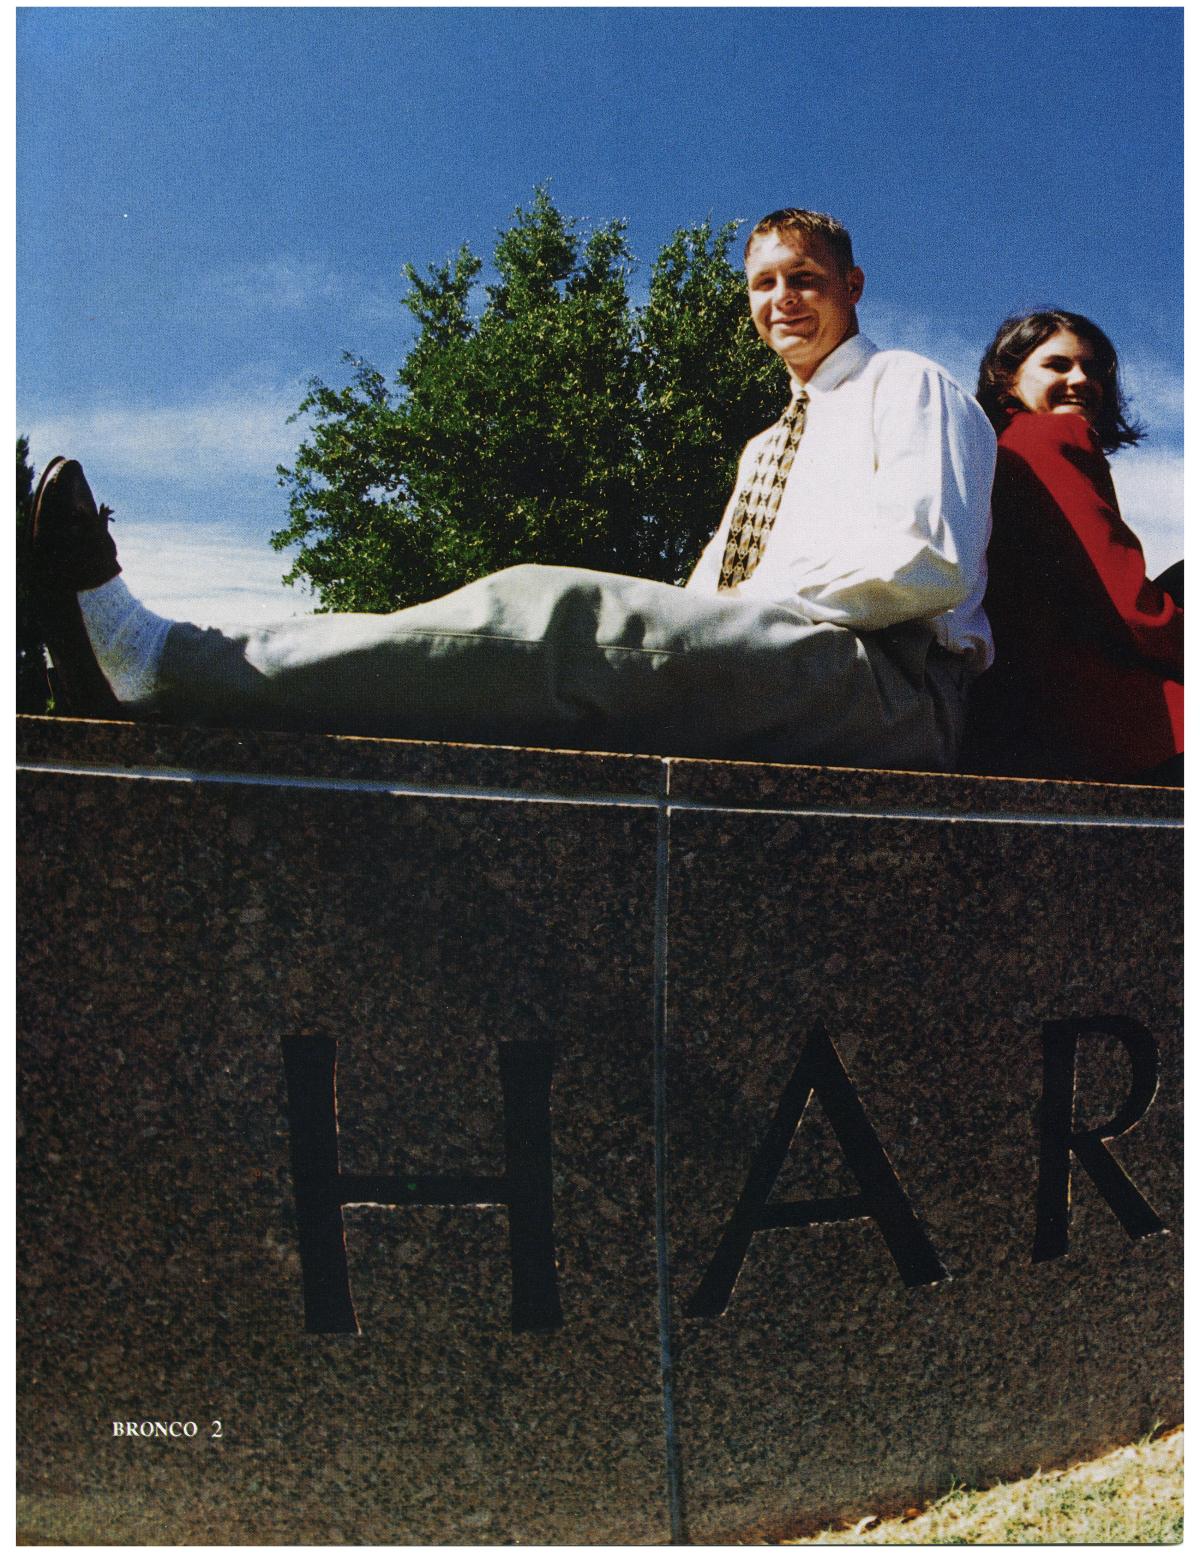 The Bronco, Yearbook of Hardin-Simmons University, 1998
                                                
                                                    2
                                                